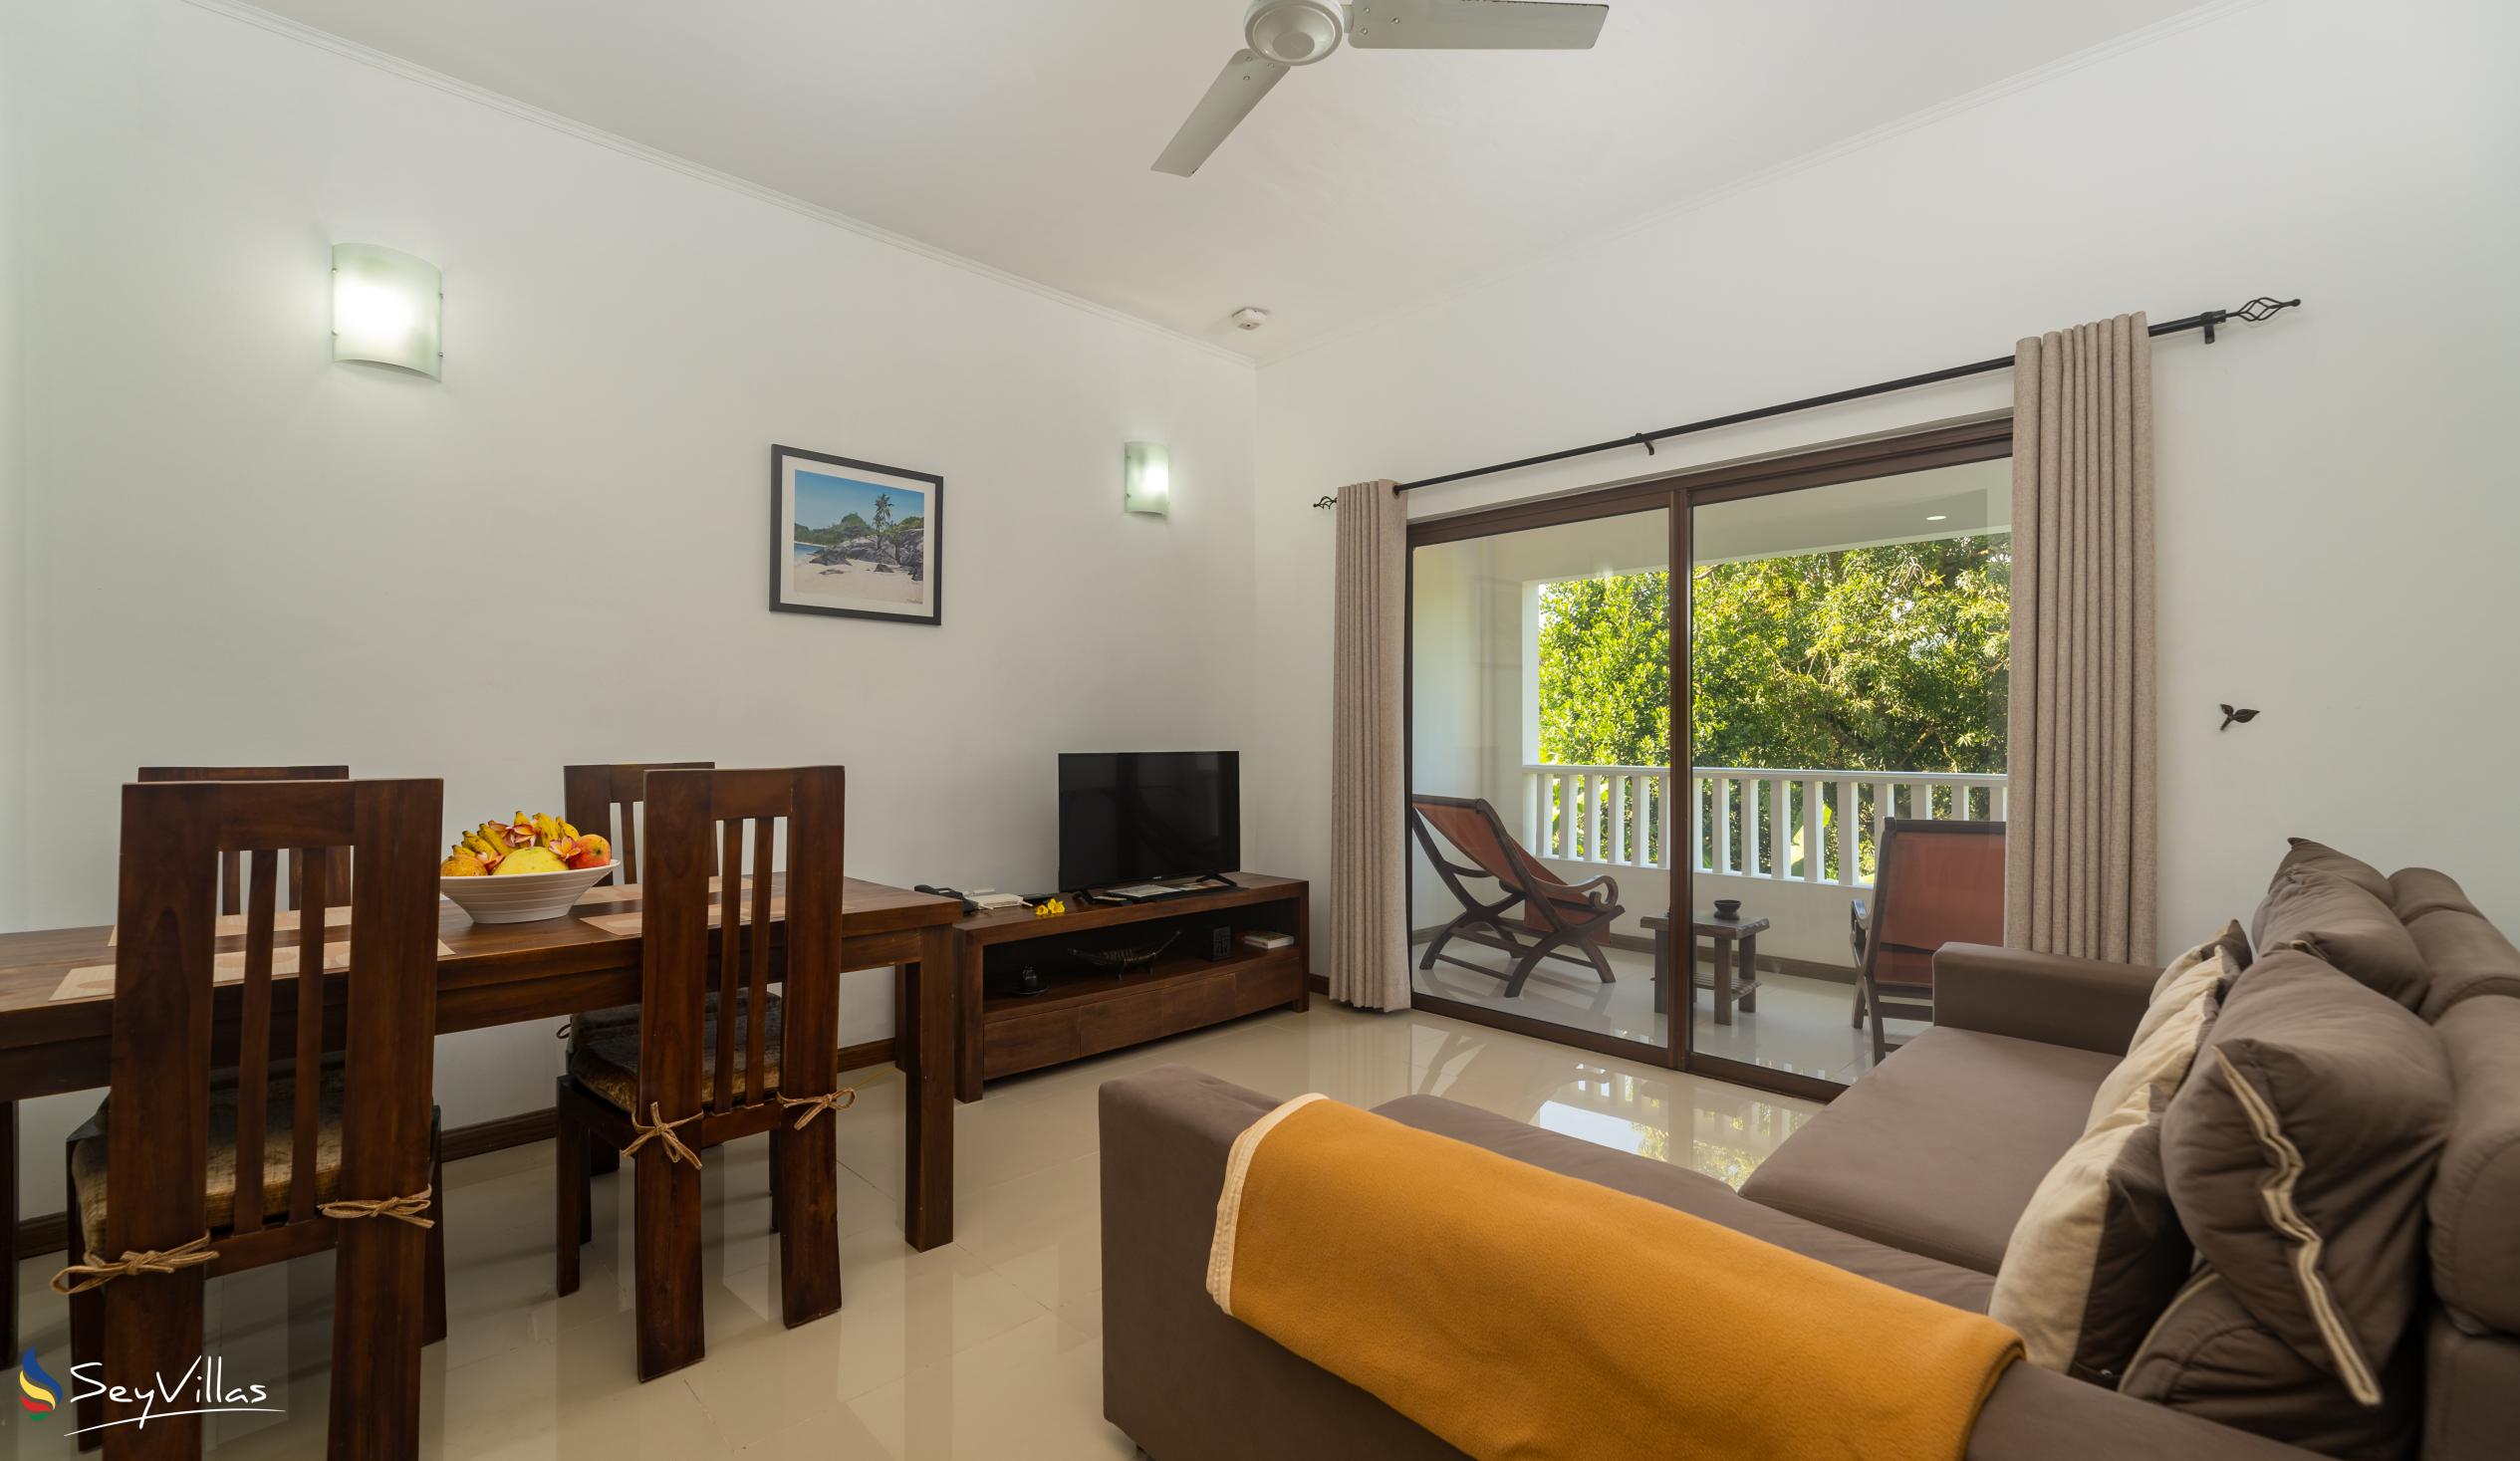 Foto 15: Kanasuk Self Catering Apartments - Appartement Cinnamon 2 chambres - Mahé (Seychelles)